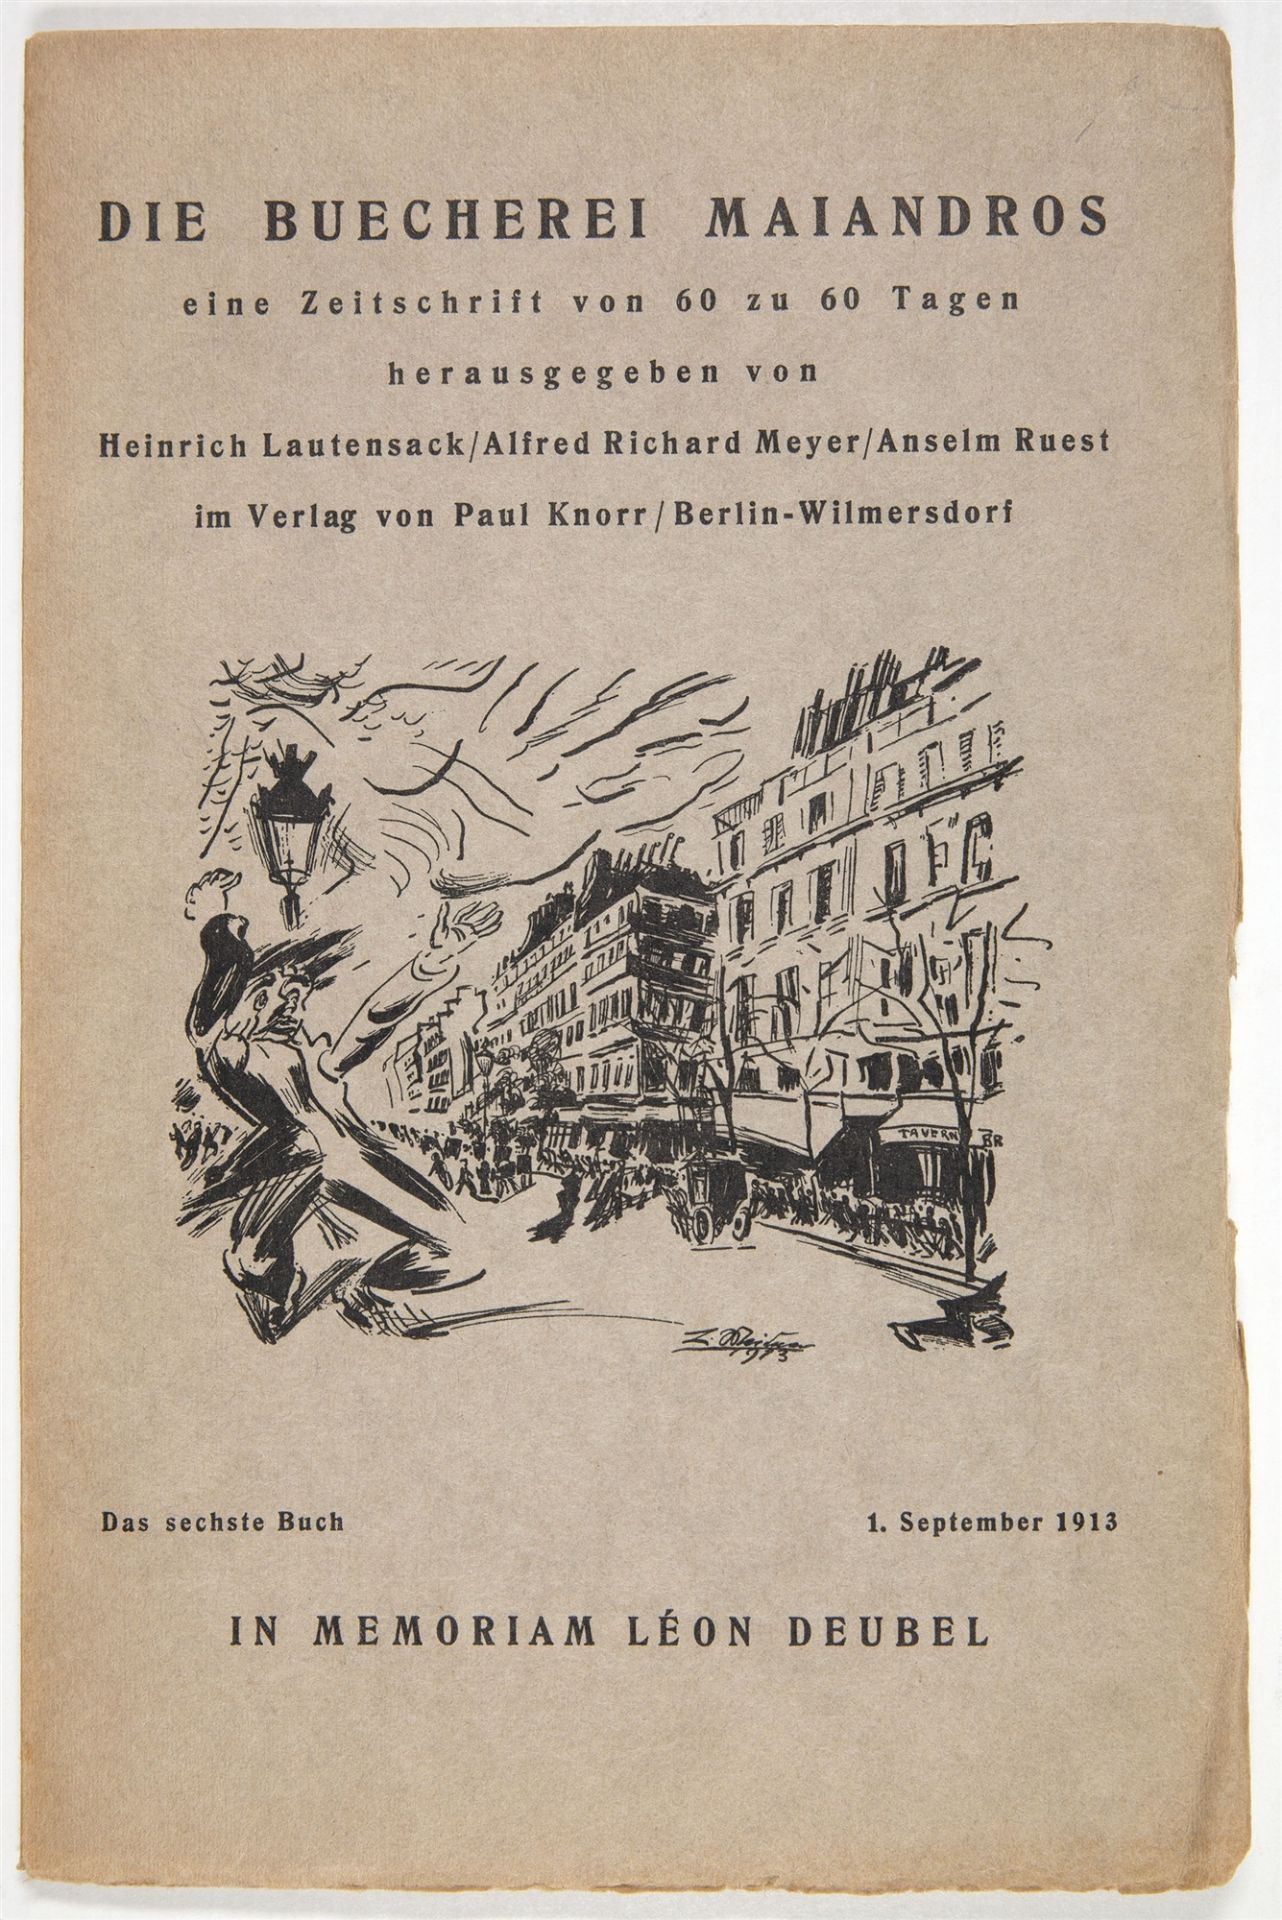 Die Buecherei Maiandros. Buch 1-6. Berlin 1912-14.